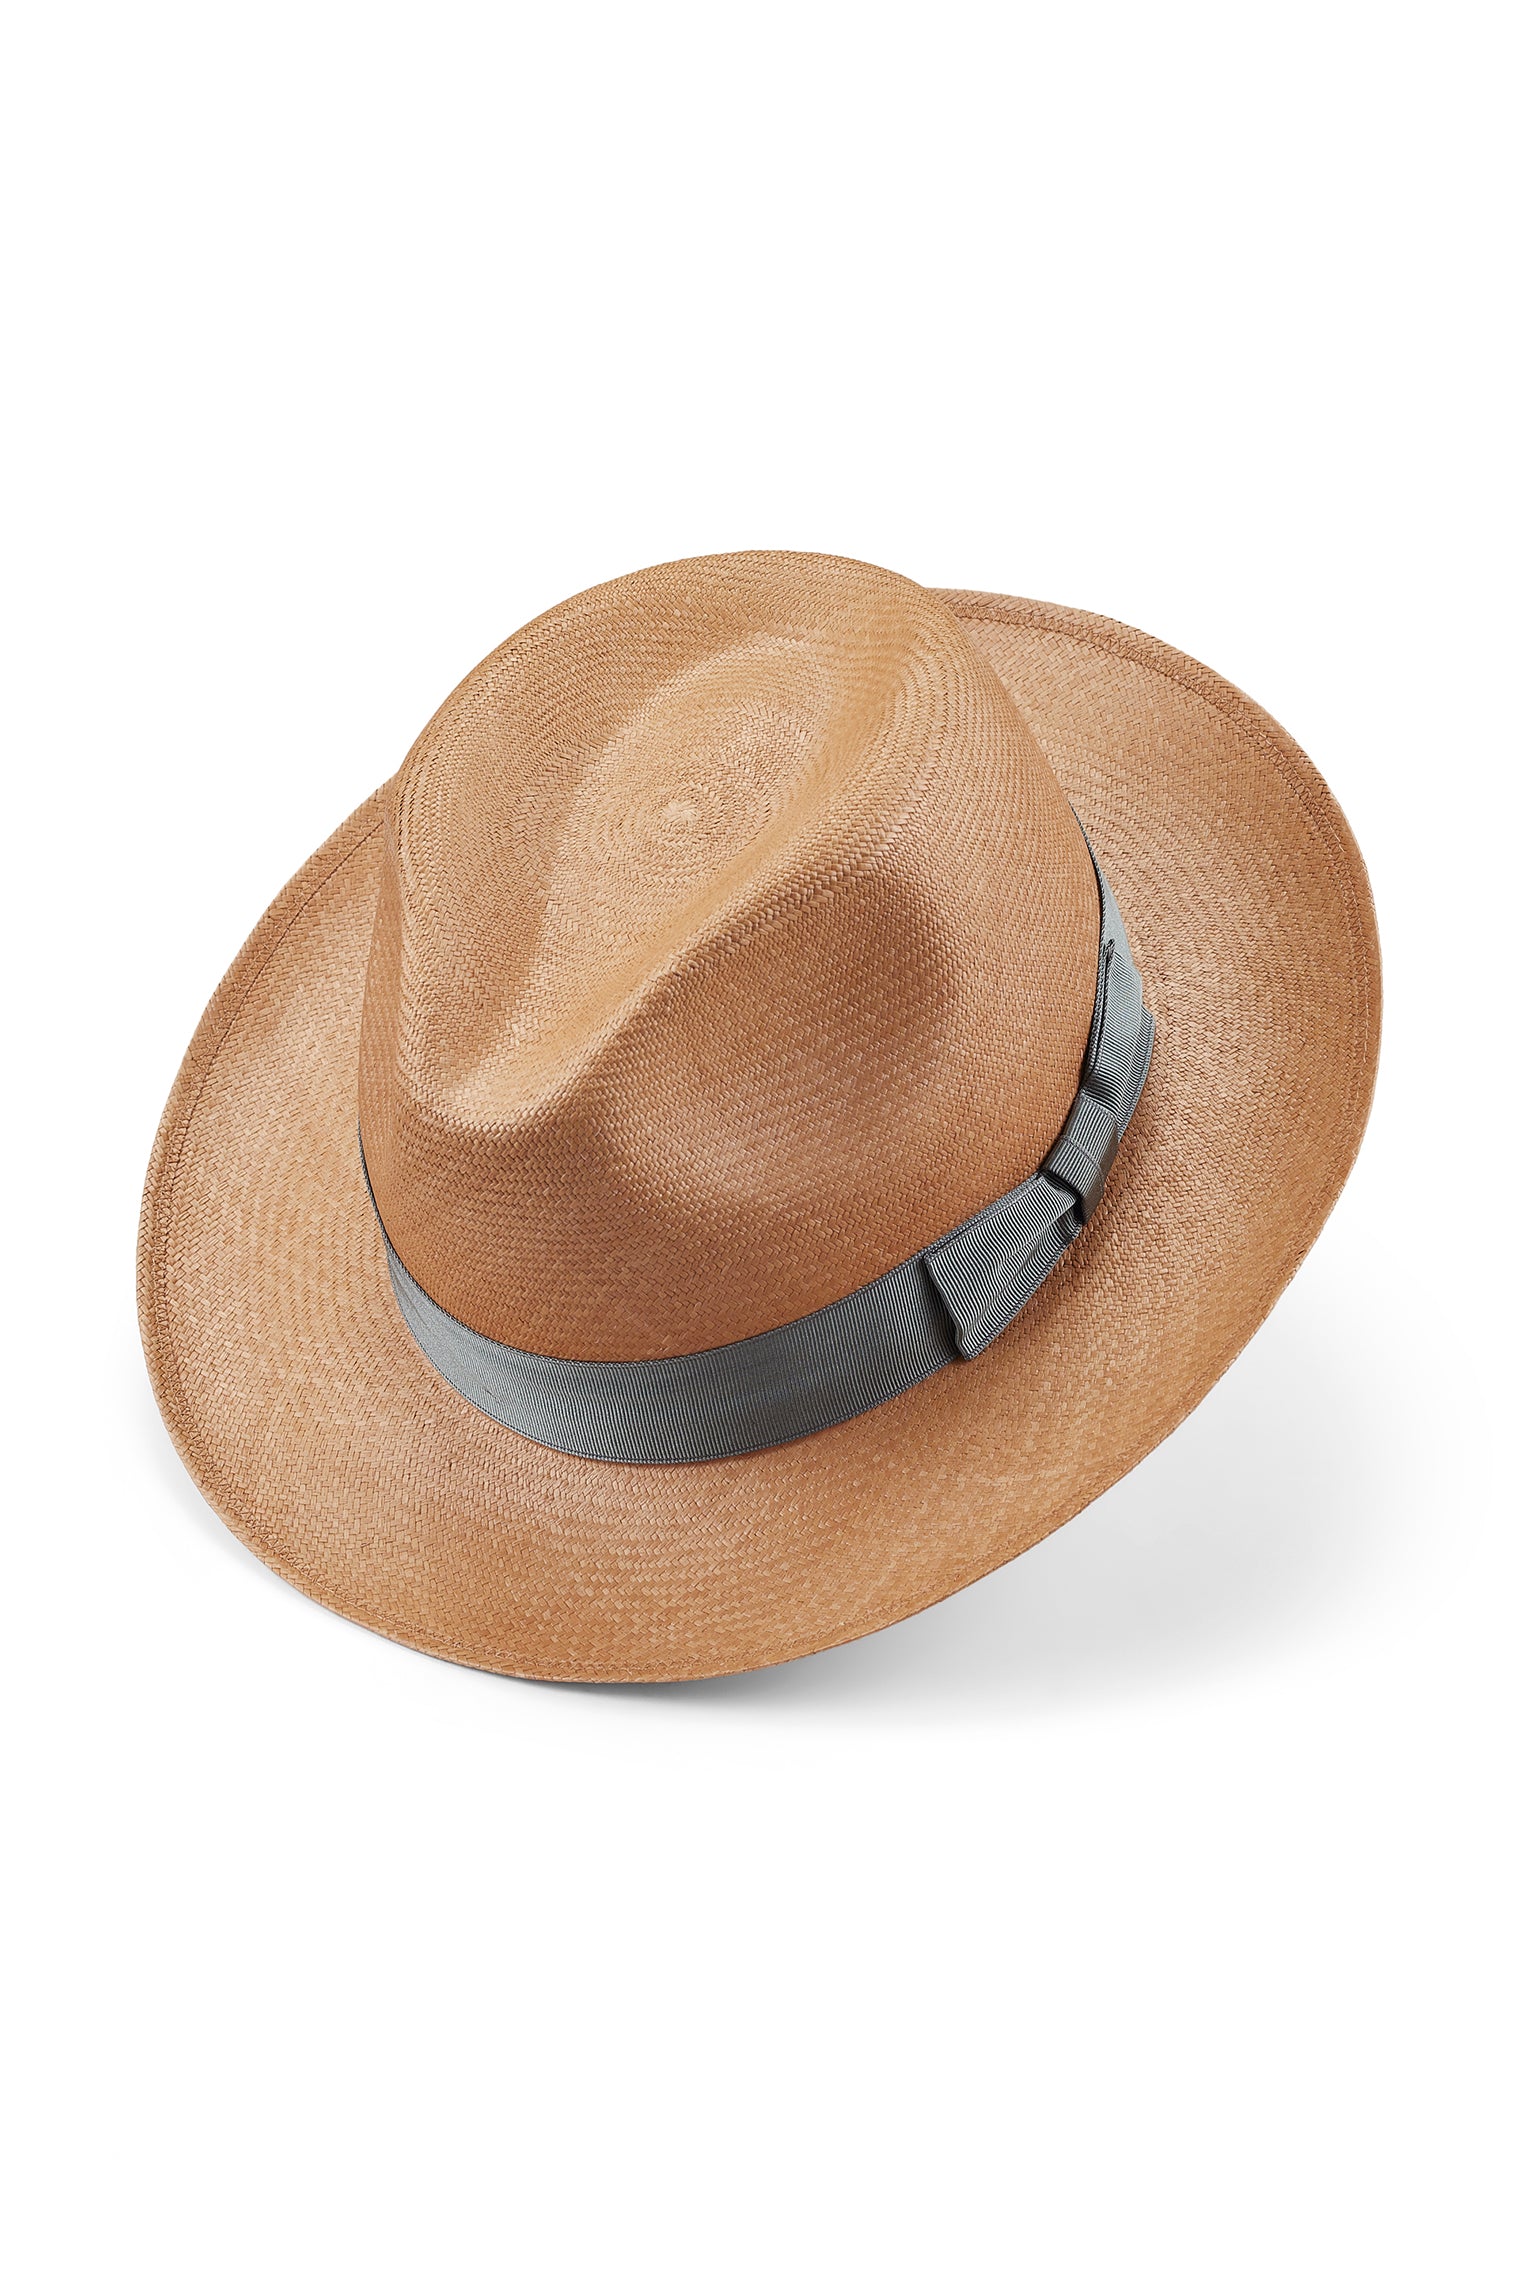 Fairbanks Mocha Panama - Panama Hats - Lock & Co. Hatters London UK